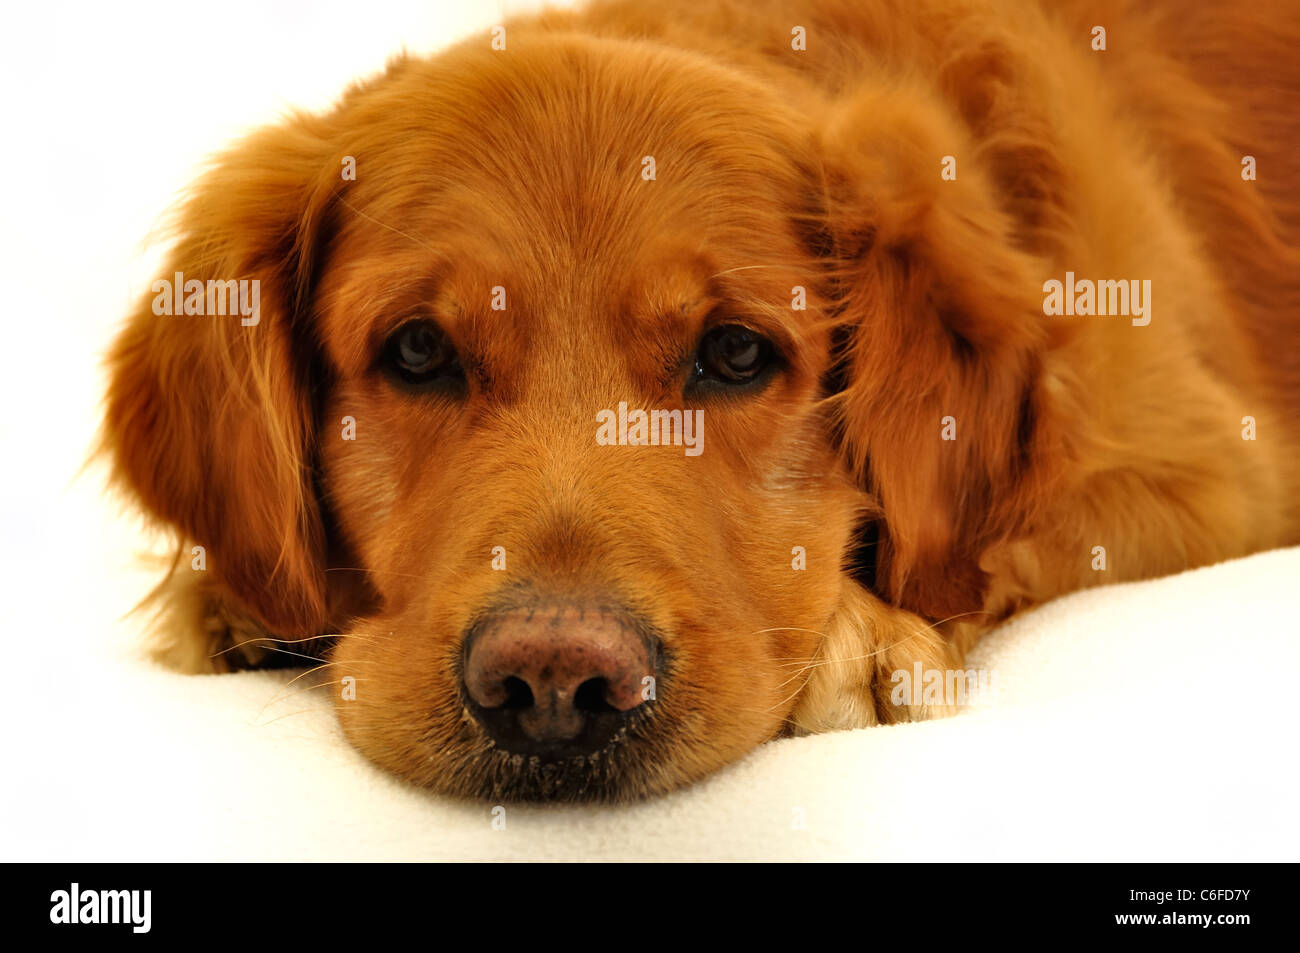 Golden retriever dog visage très expressif. Banque D'Images